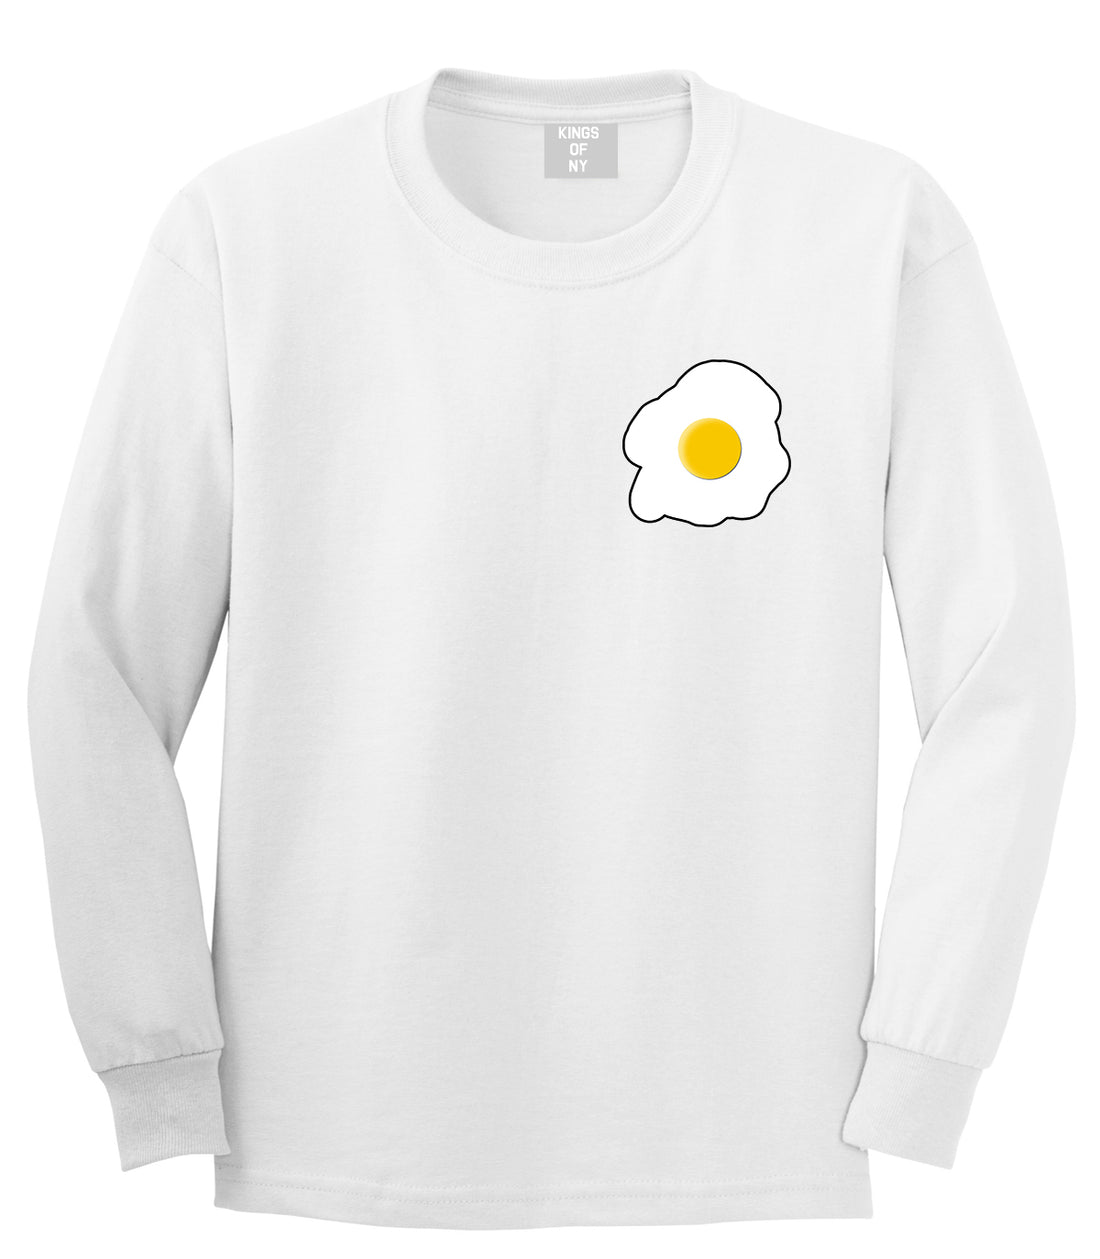 Fried Egg Breakfast Chest Mens White Long Sleeve T-Shirt by KINGS OF NY